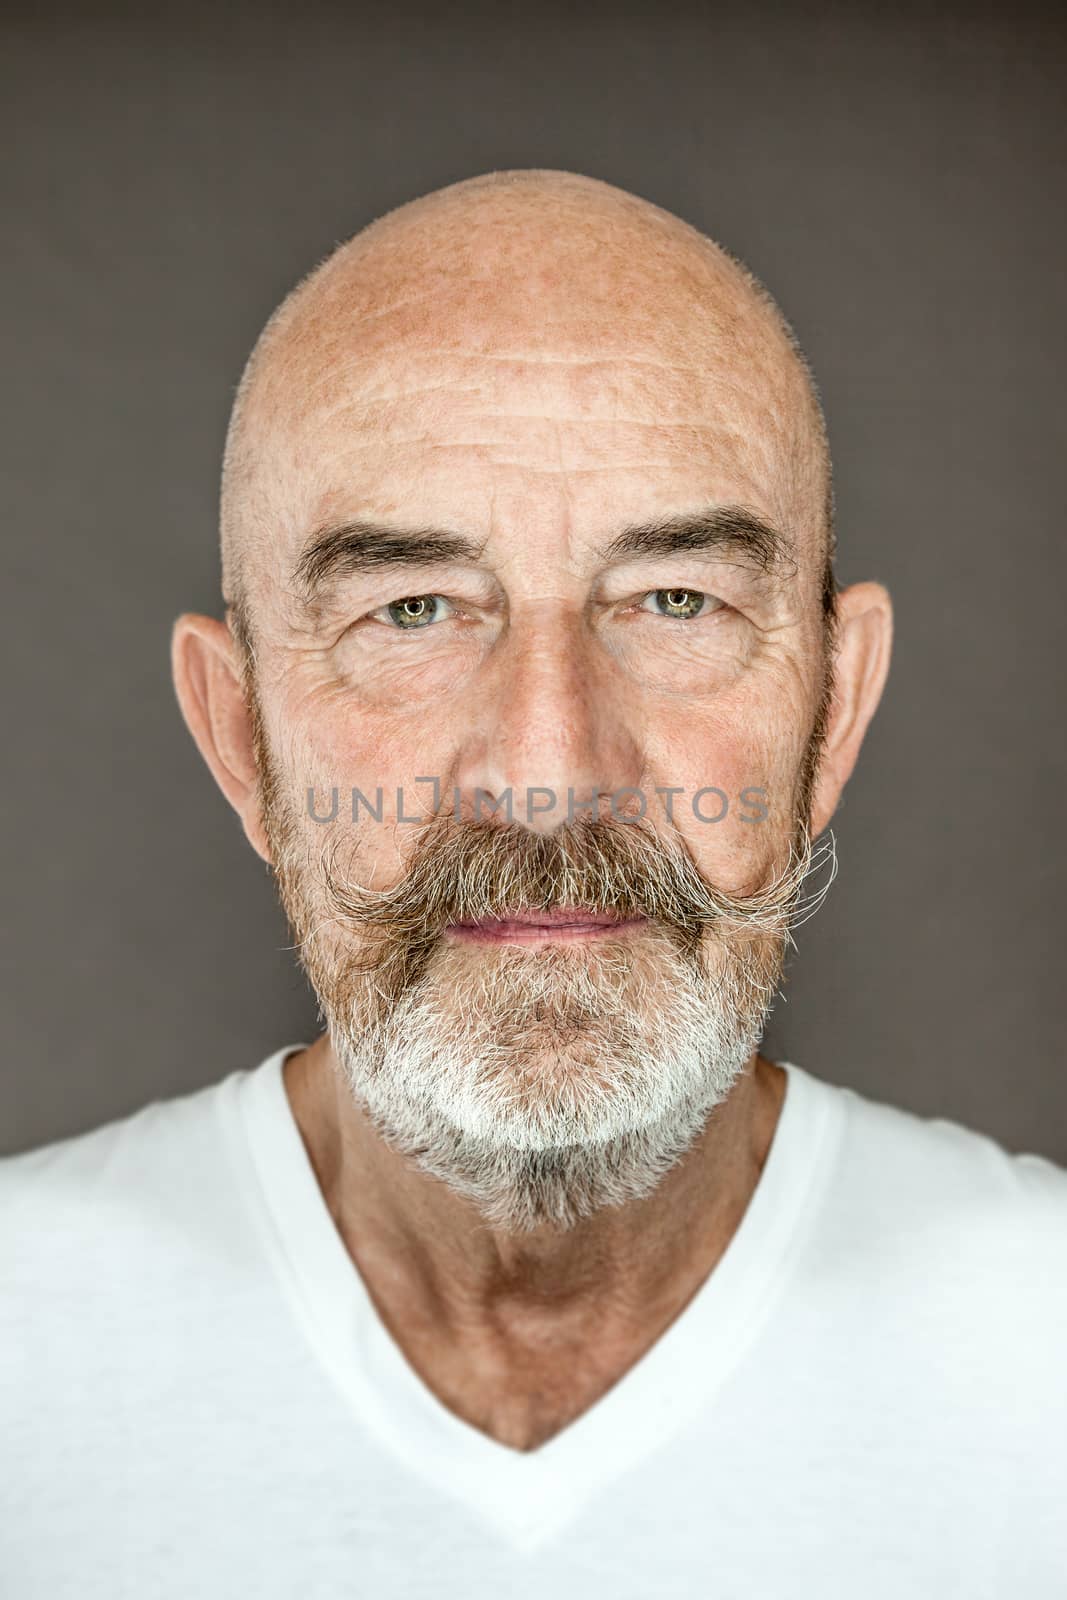 An old man with a grey beard